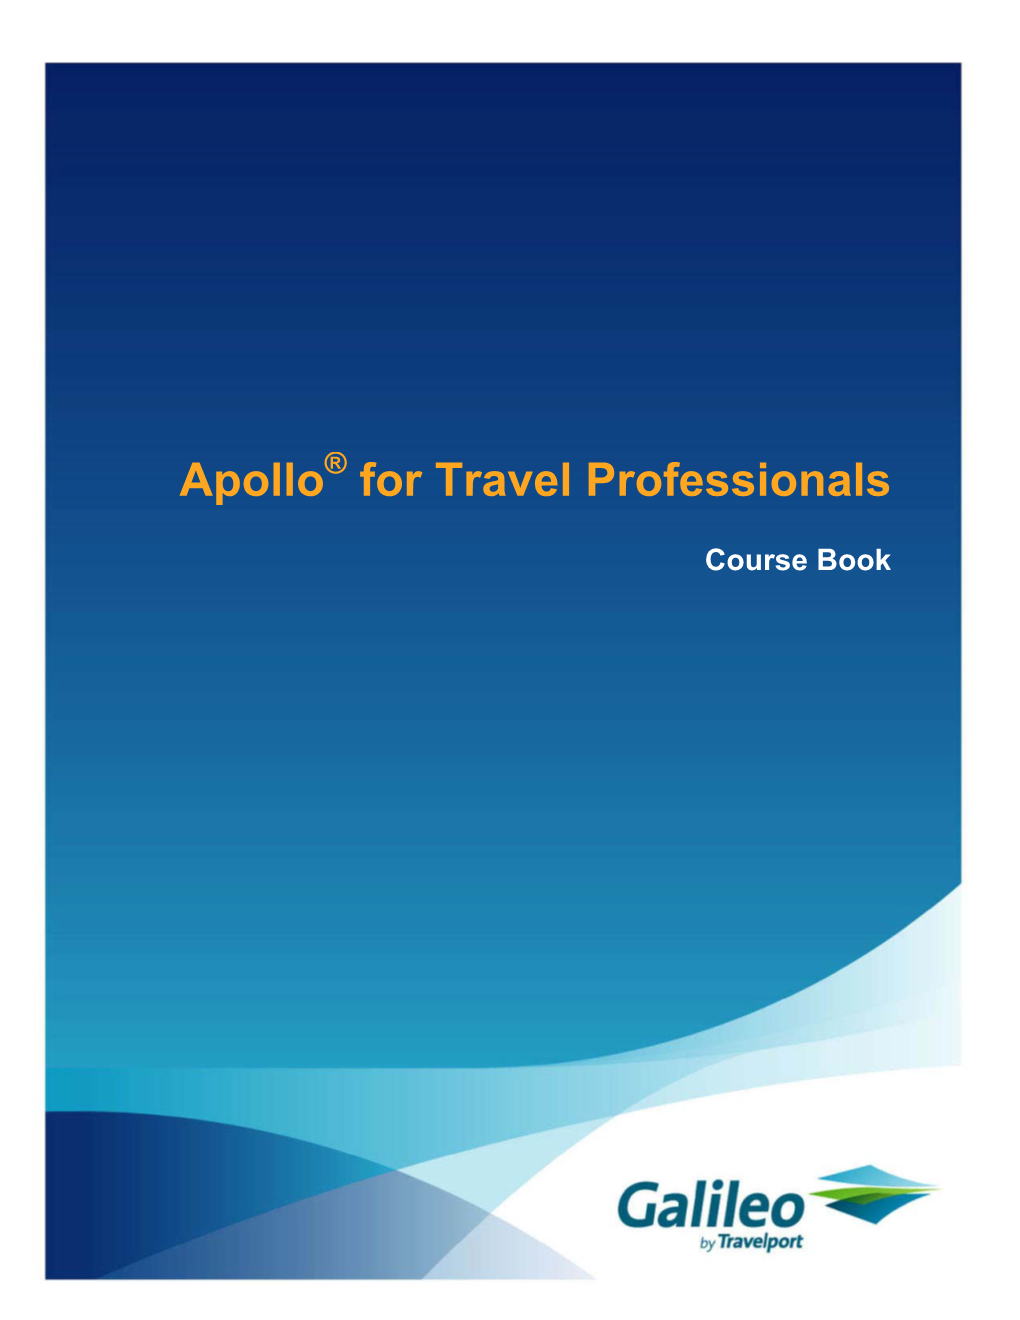 Apollo for Travel Professionals